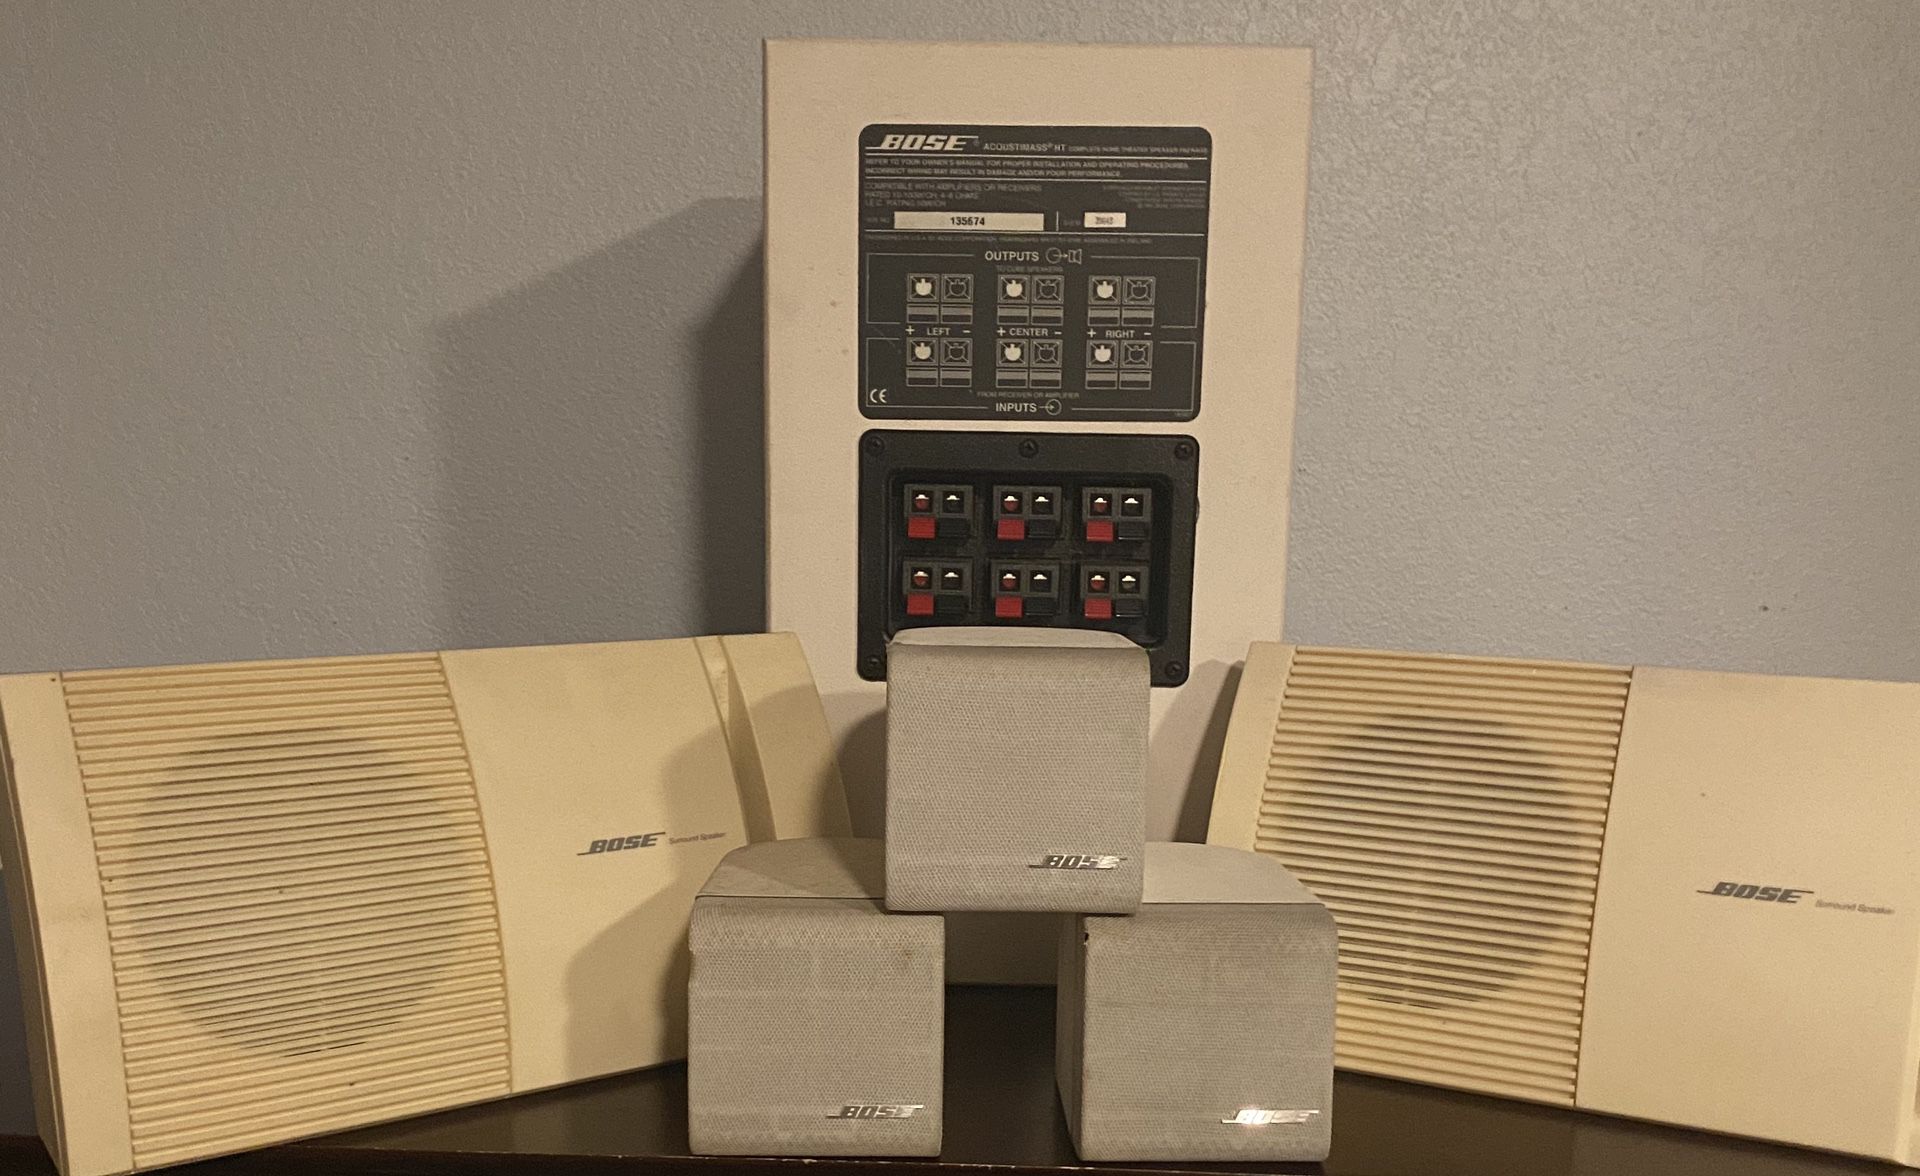 Bose Acoustimas Surround Sound Theater speaker system